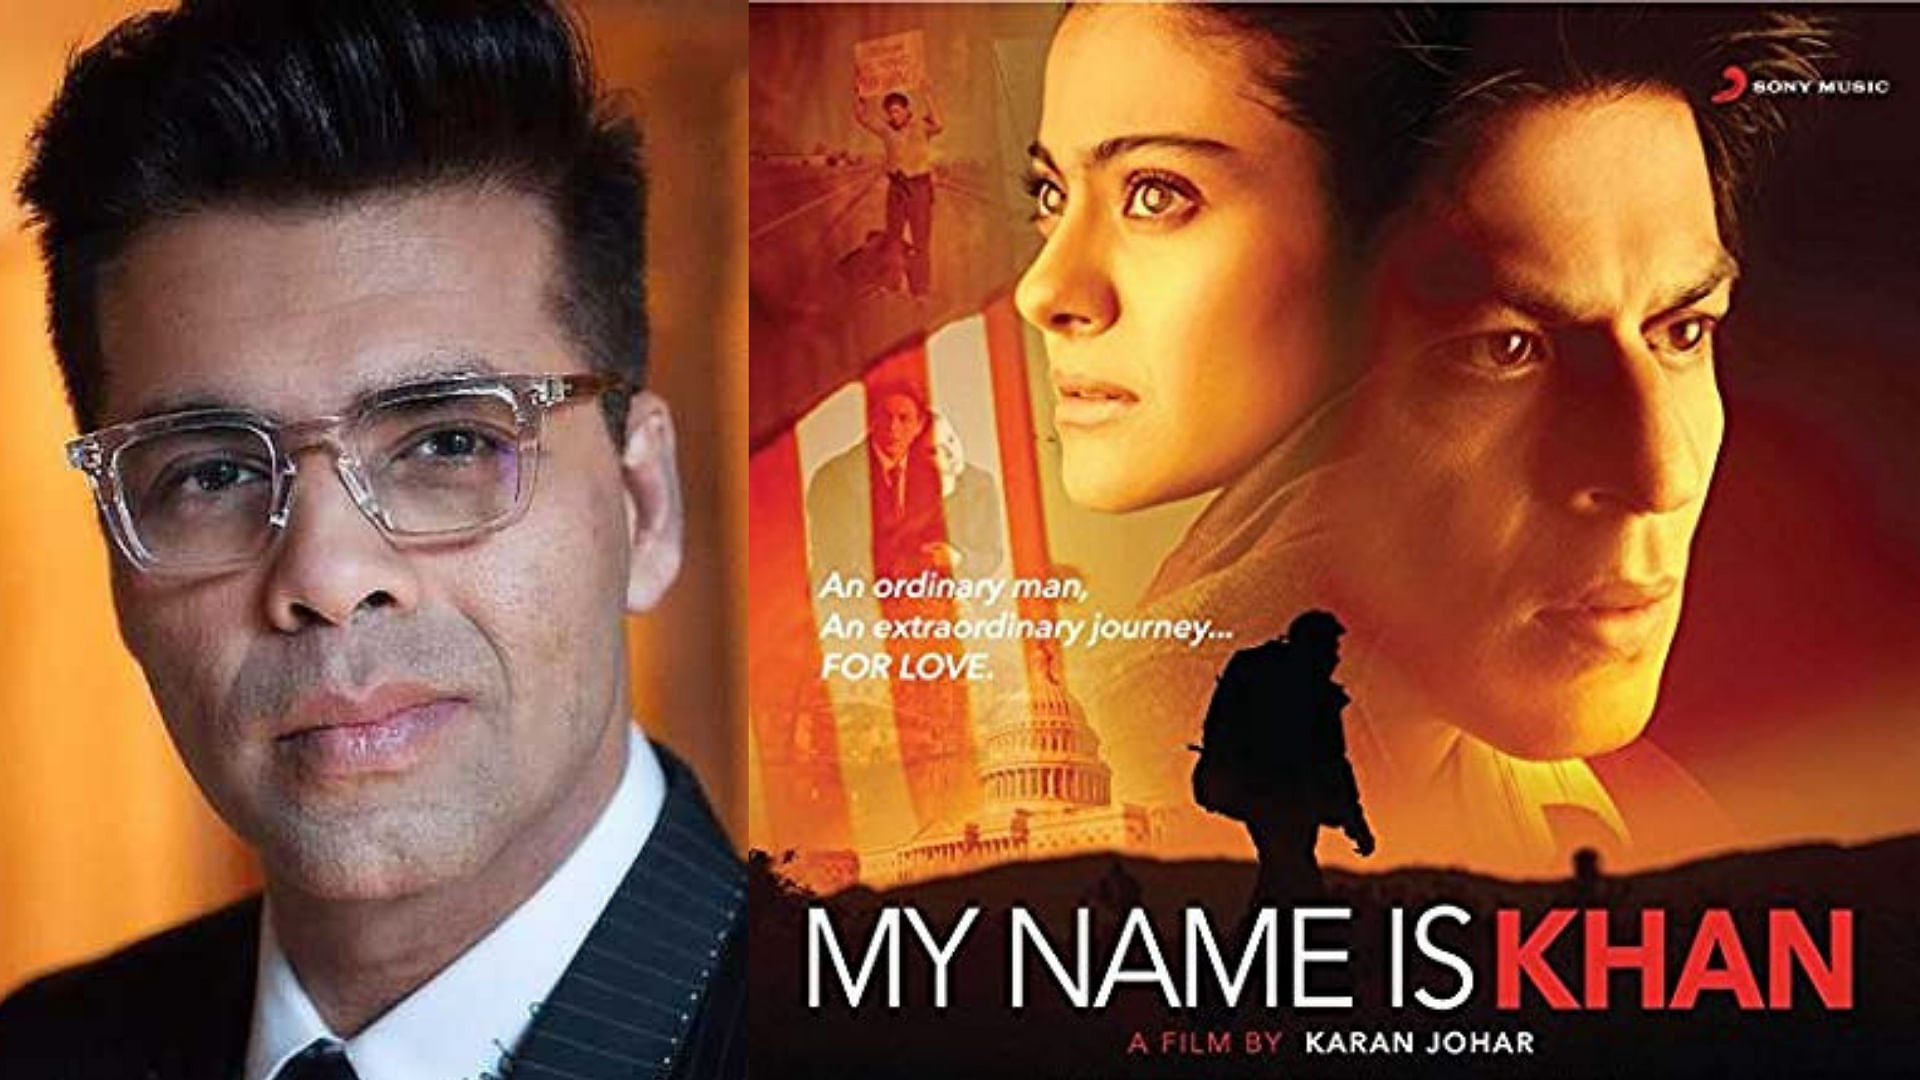 Karan Johar directed <i>My Name Is Khan</i> which released in 2010.